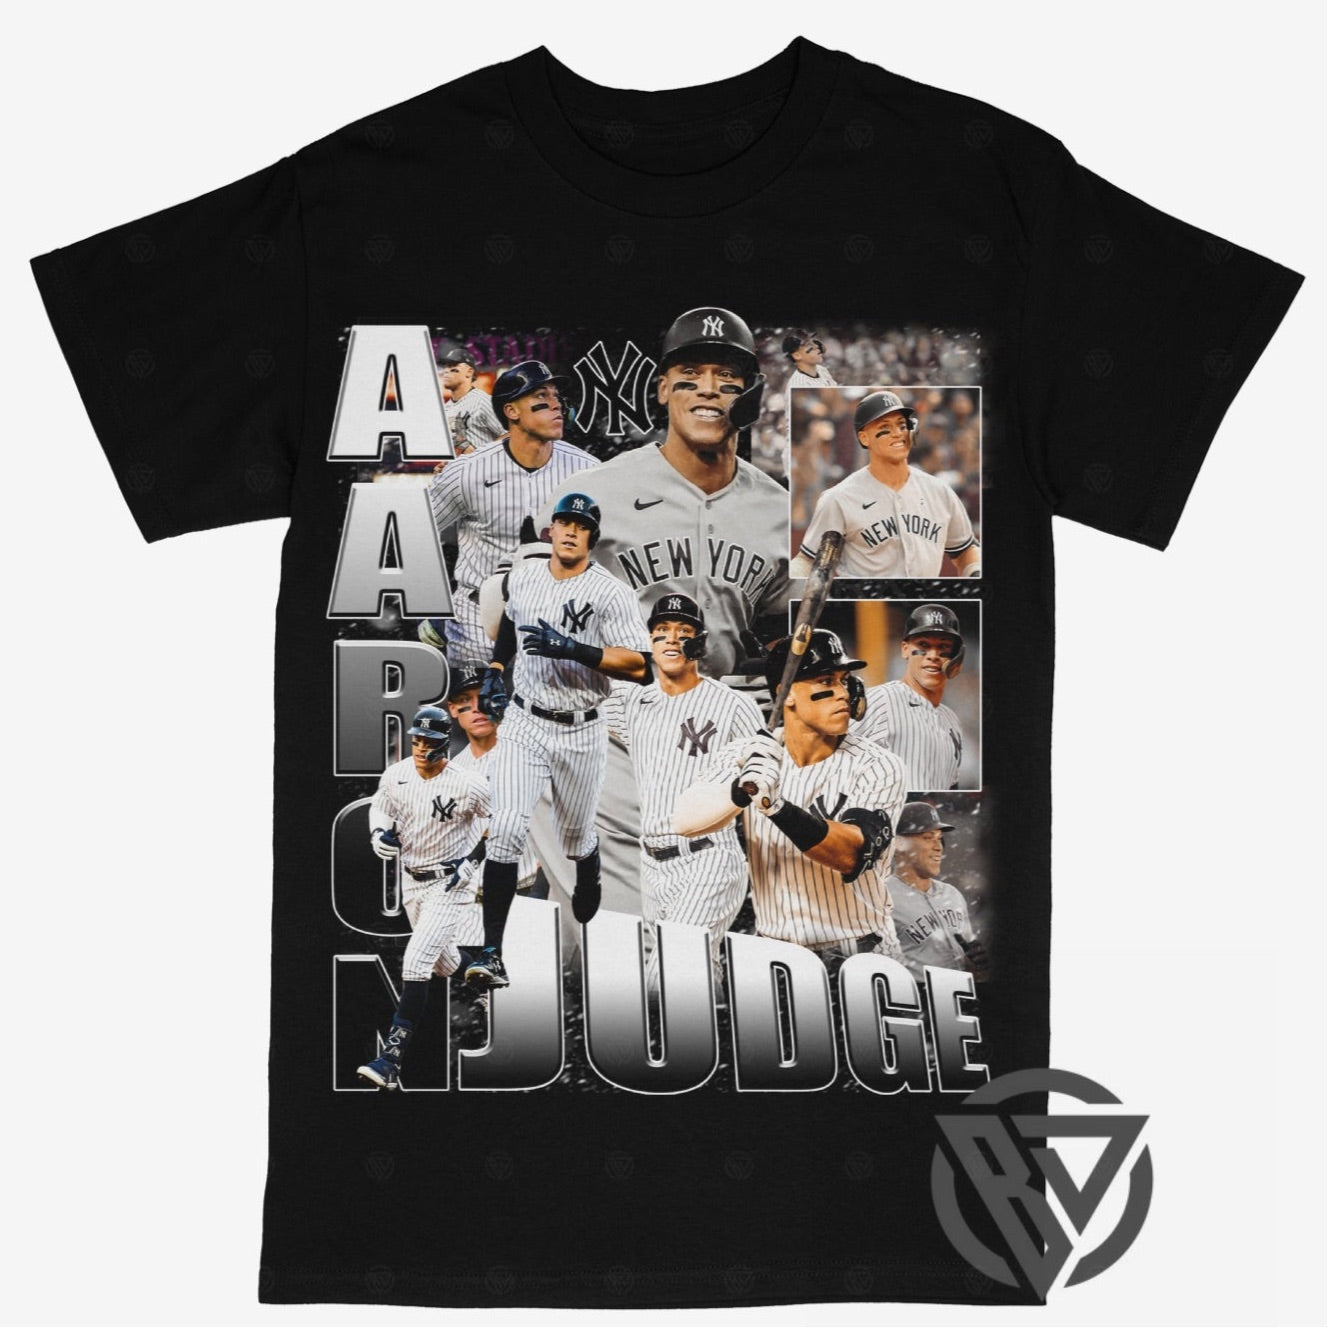 MLB, Shirts, Aaron Judge Baseball Jersey